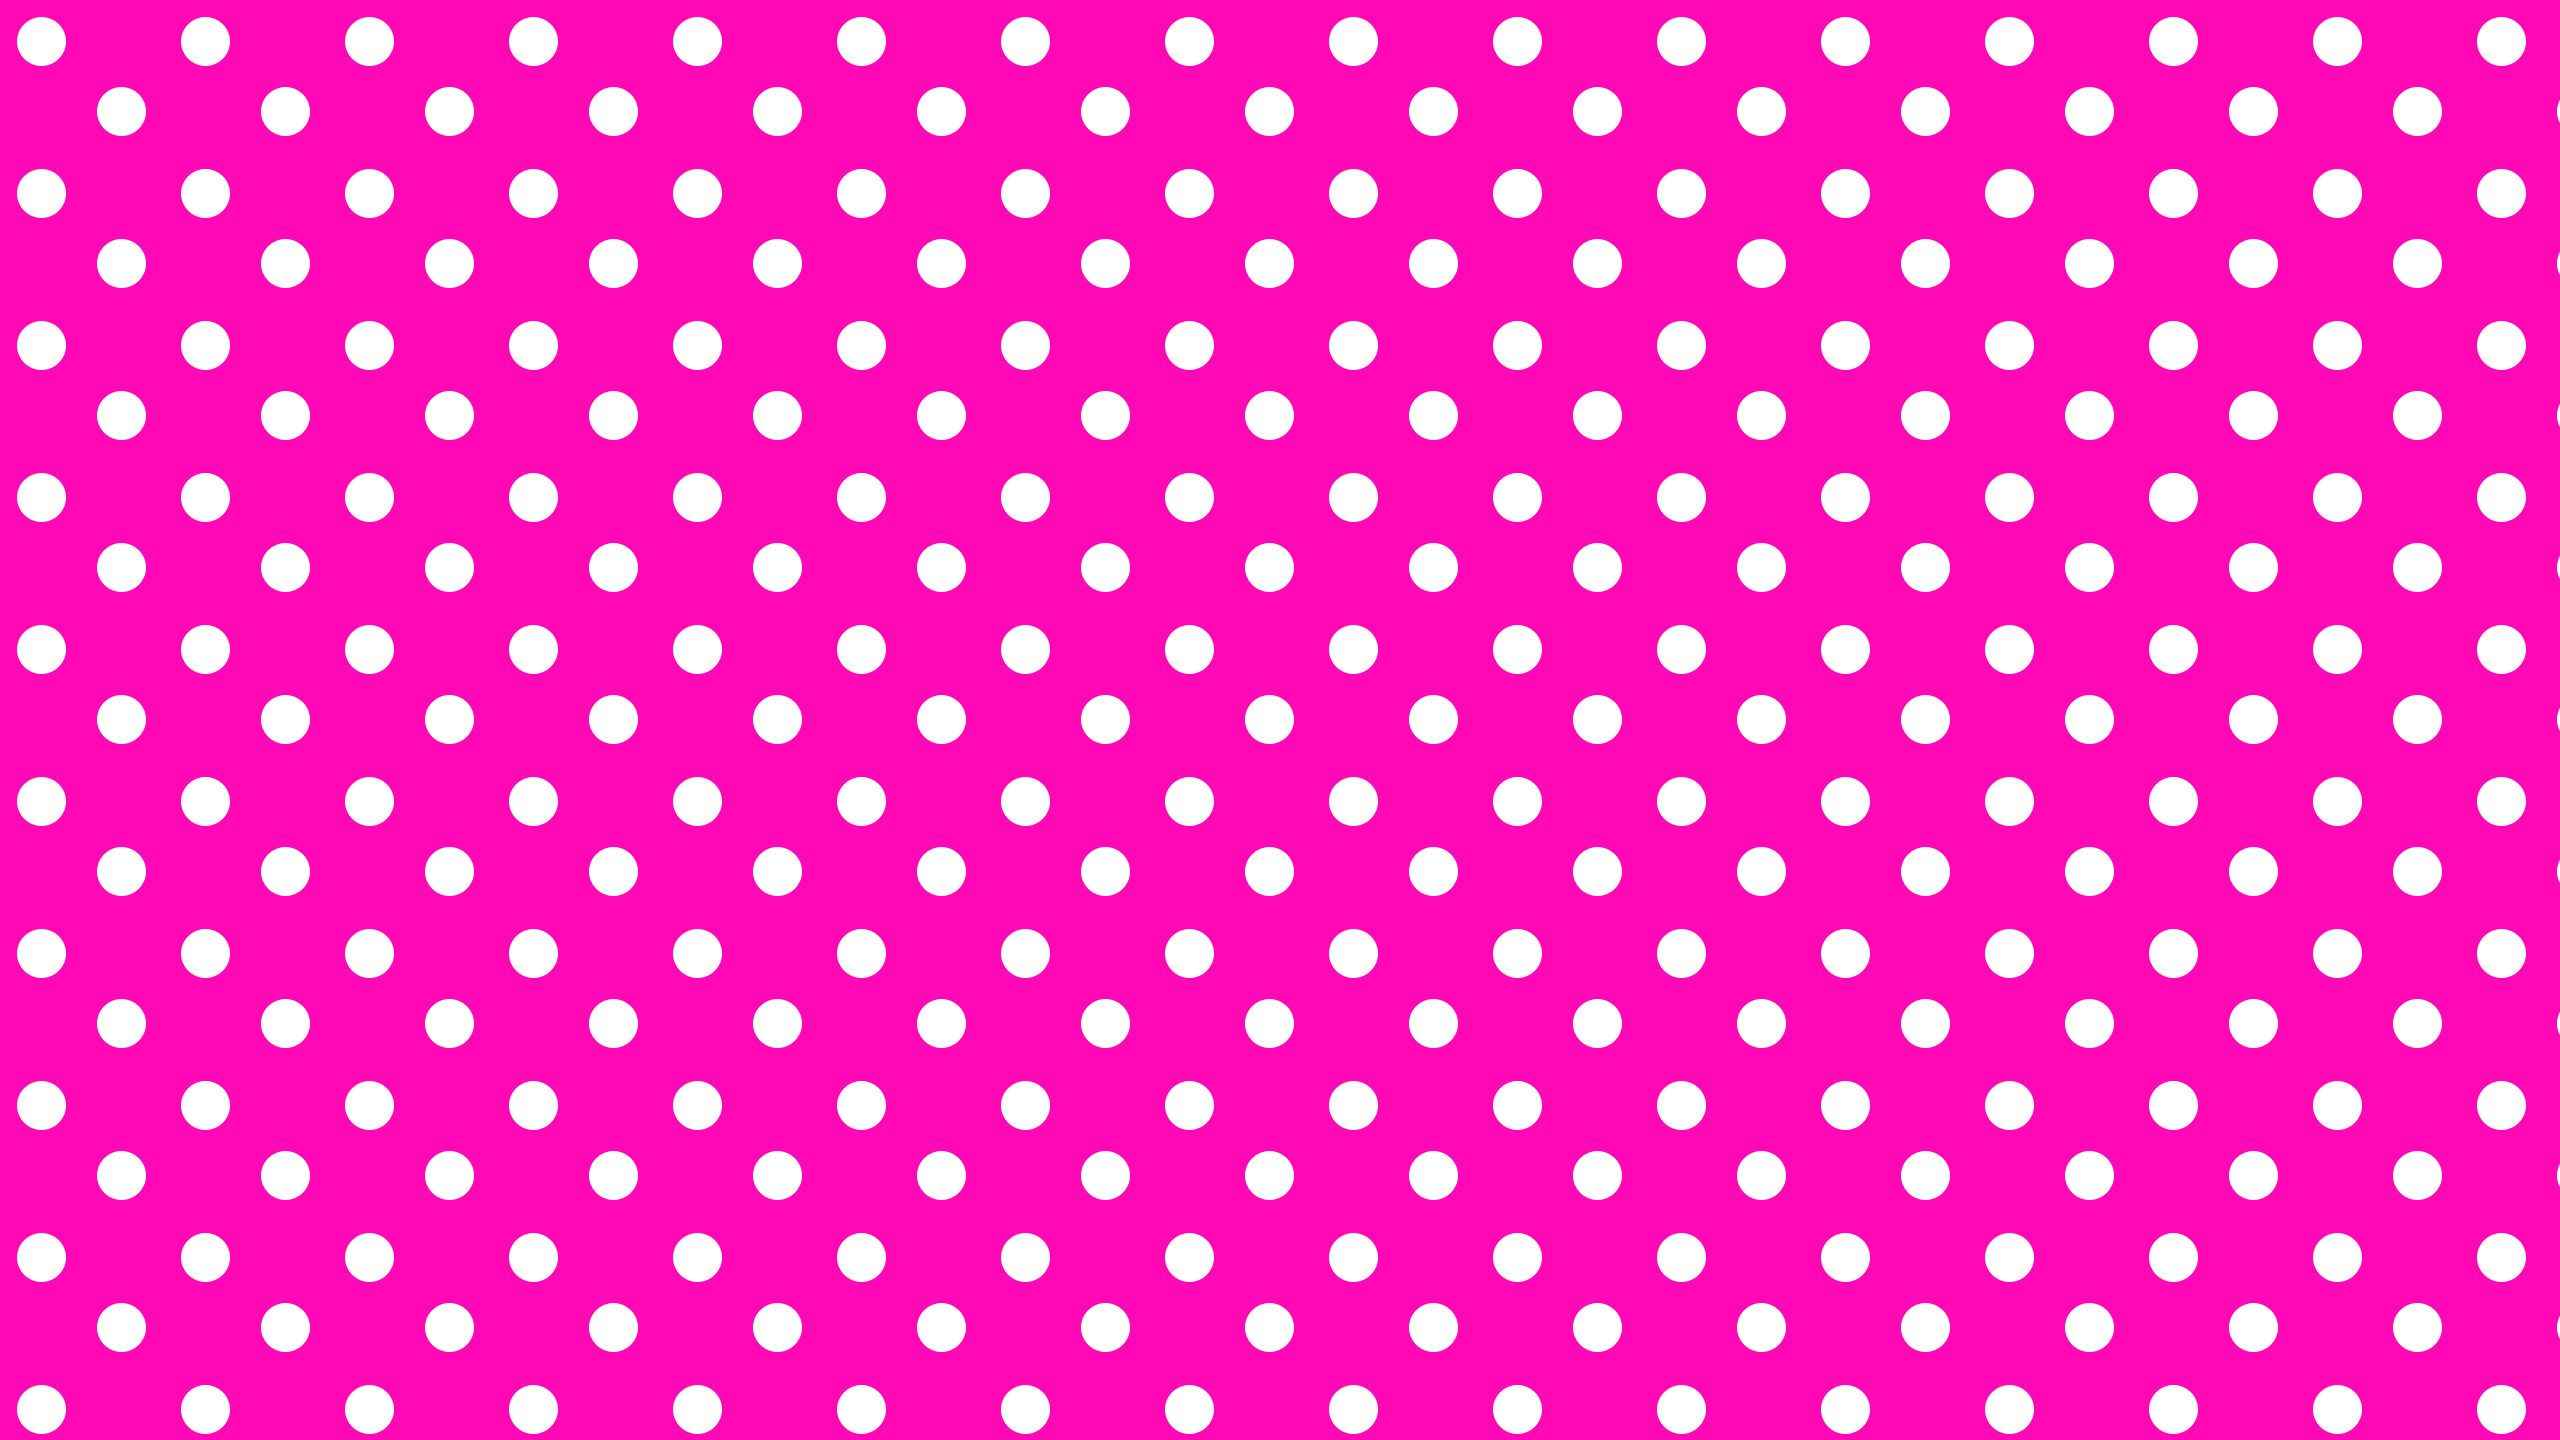 Minnie Mouse Polka Dot Wallpaper Free Minnie Mouse Polka Dot Background